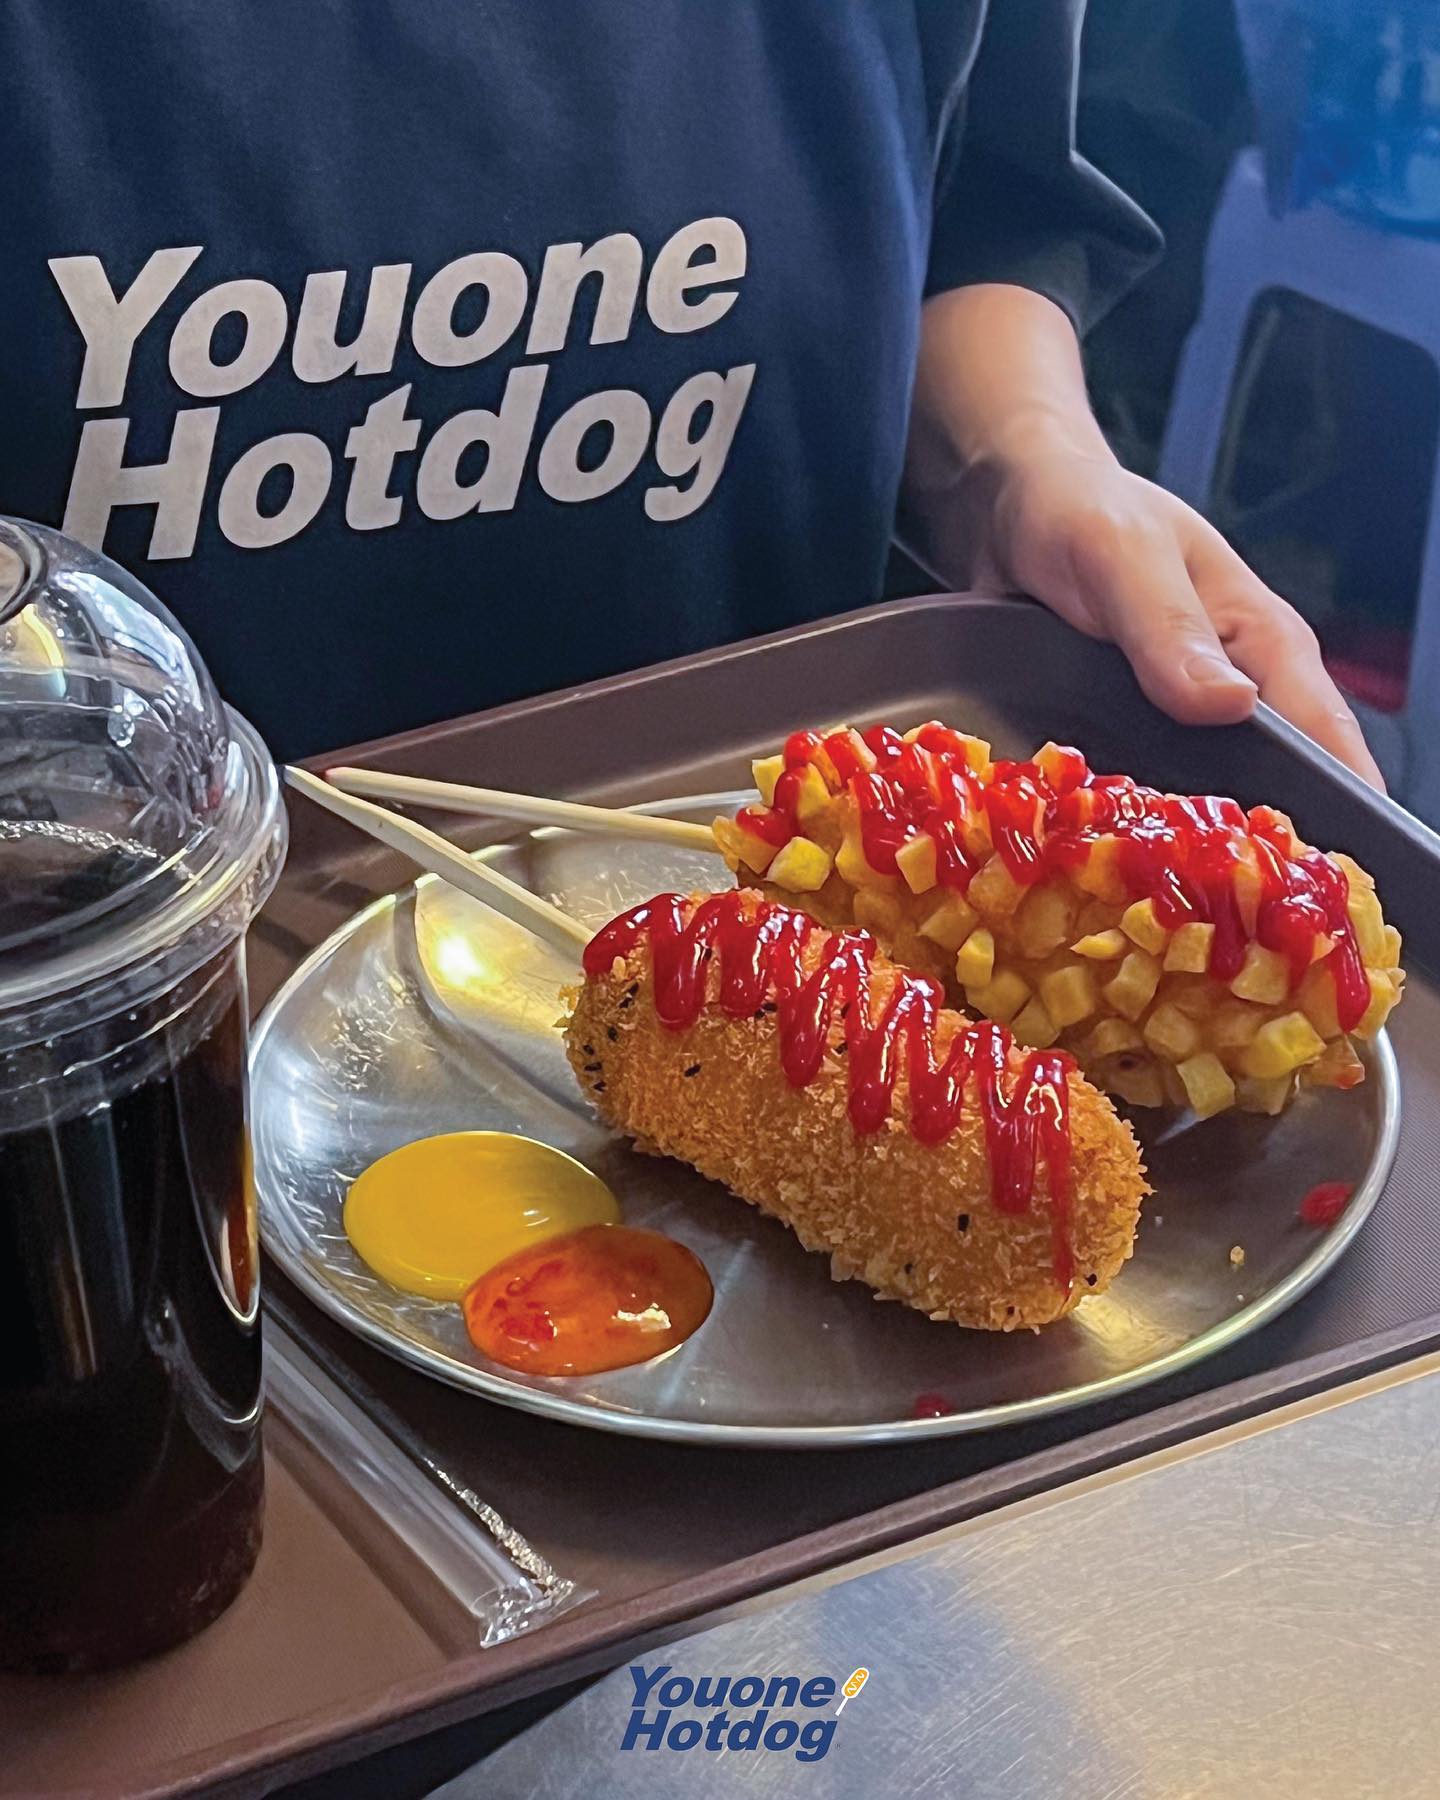 YouOne Hotdog ảnh 2